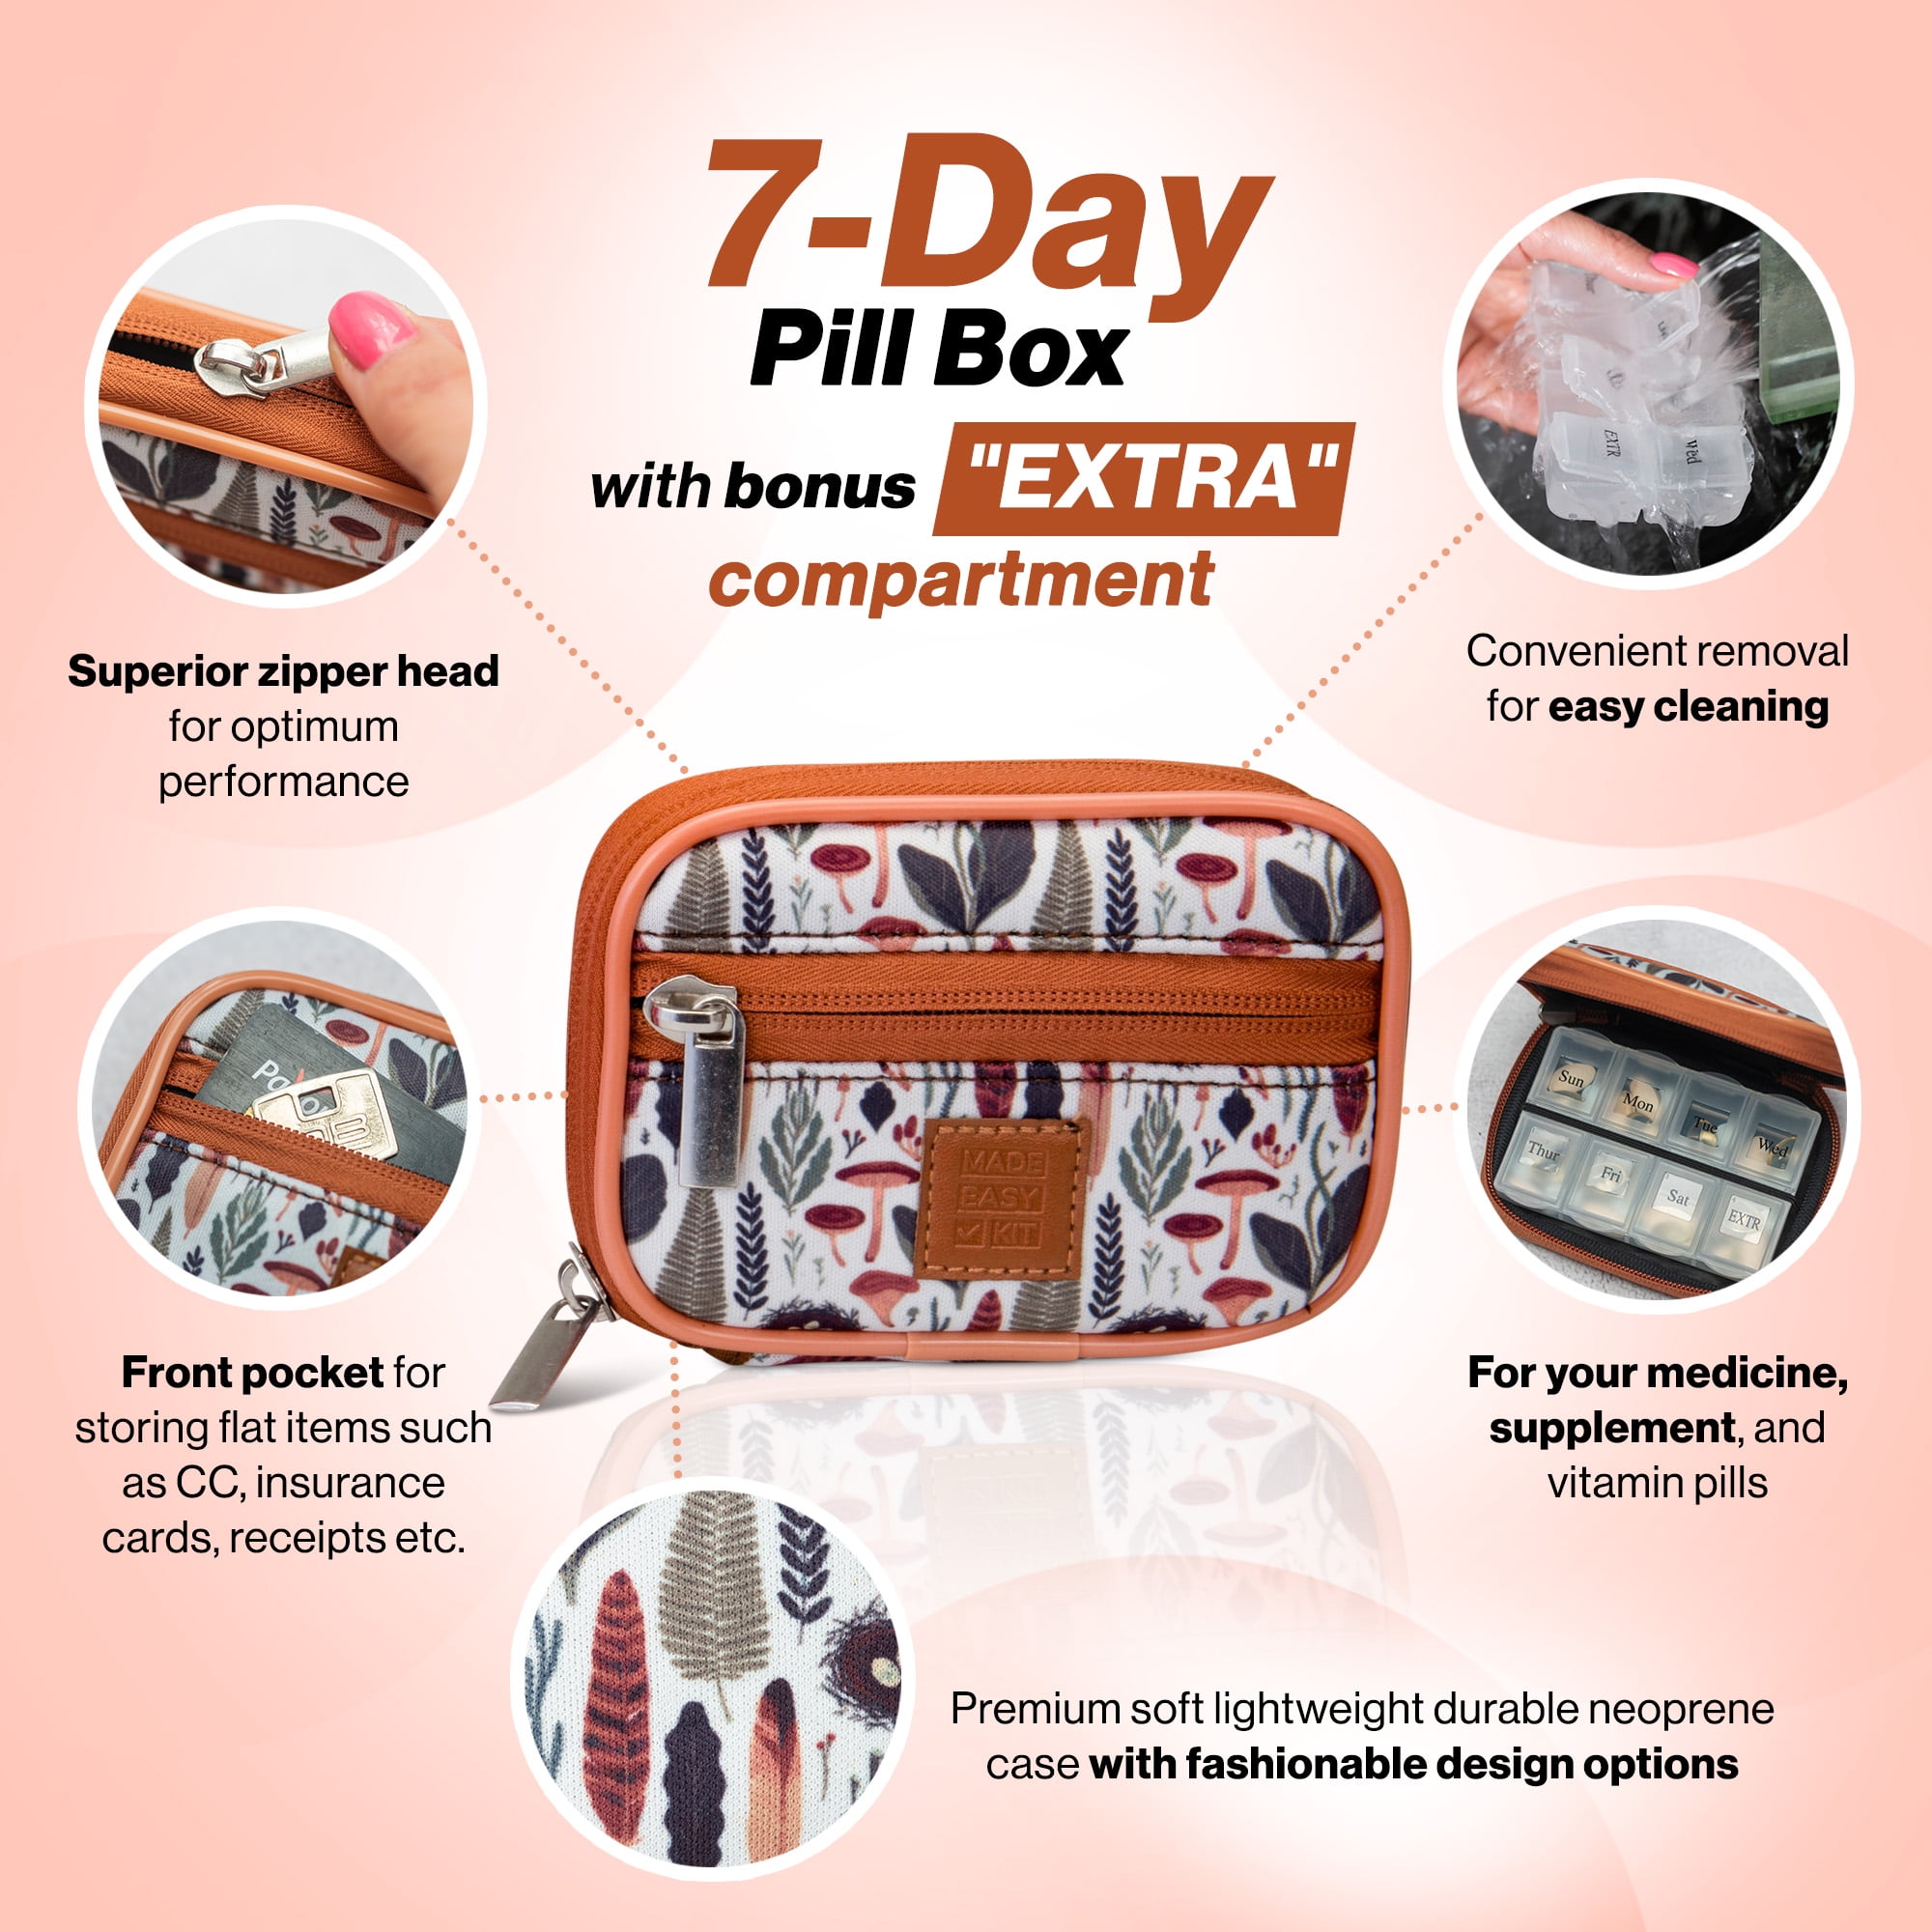 Healvian 2pcs Medical Kit Fsa Eligible Items Only List Medicine Organizer  Big Pill Case Items Metal